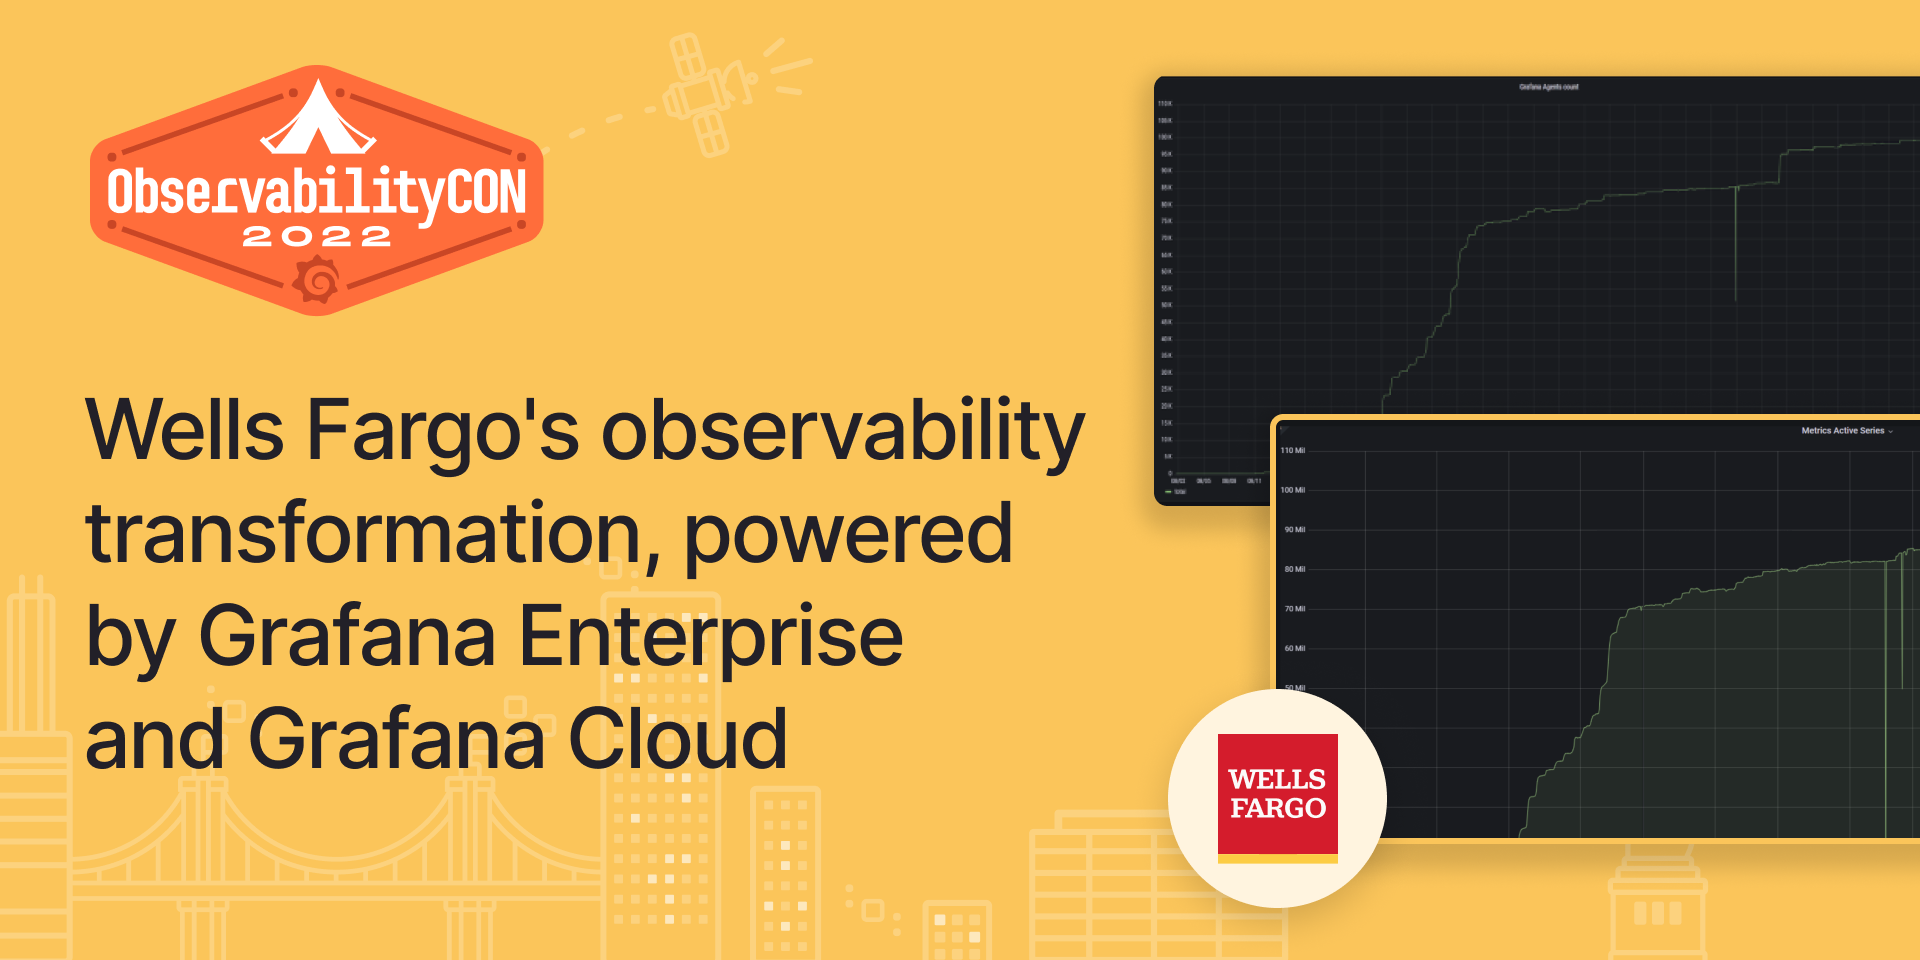 Wells Fargo's observability transformation, powered by Grafana Enterprise and Grafana Cloud